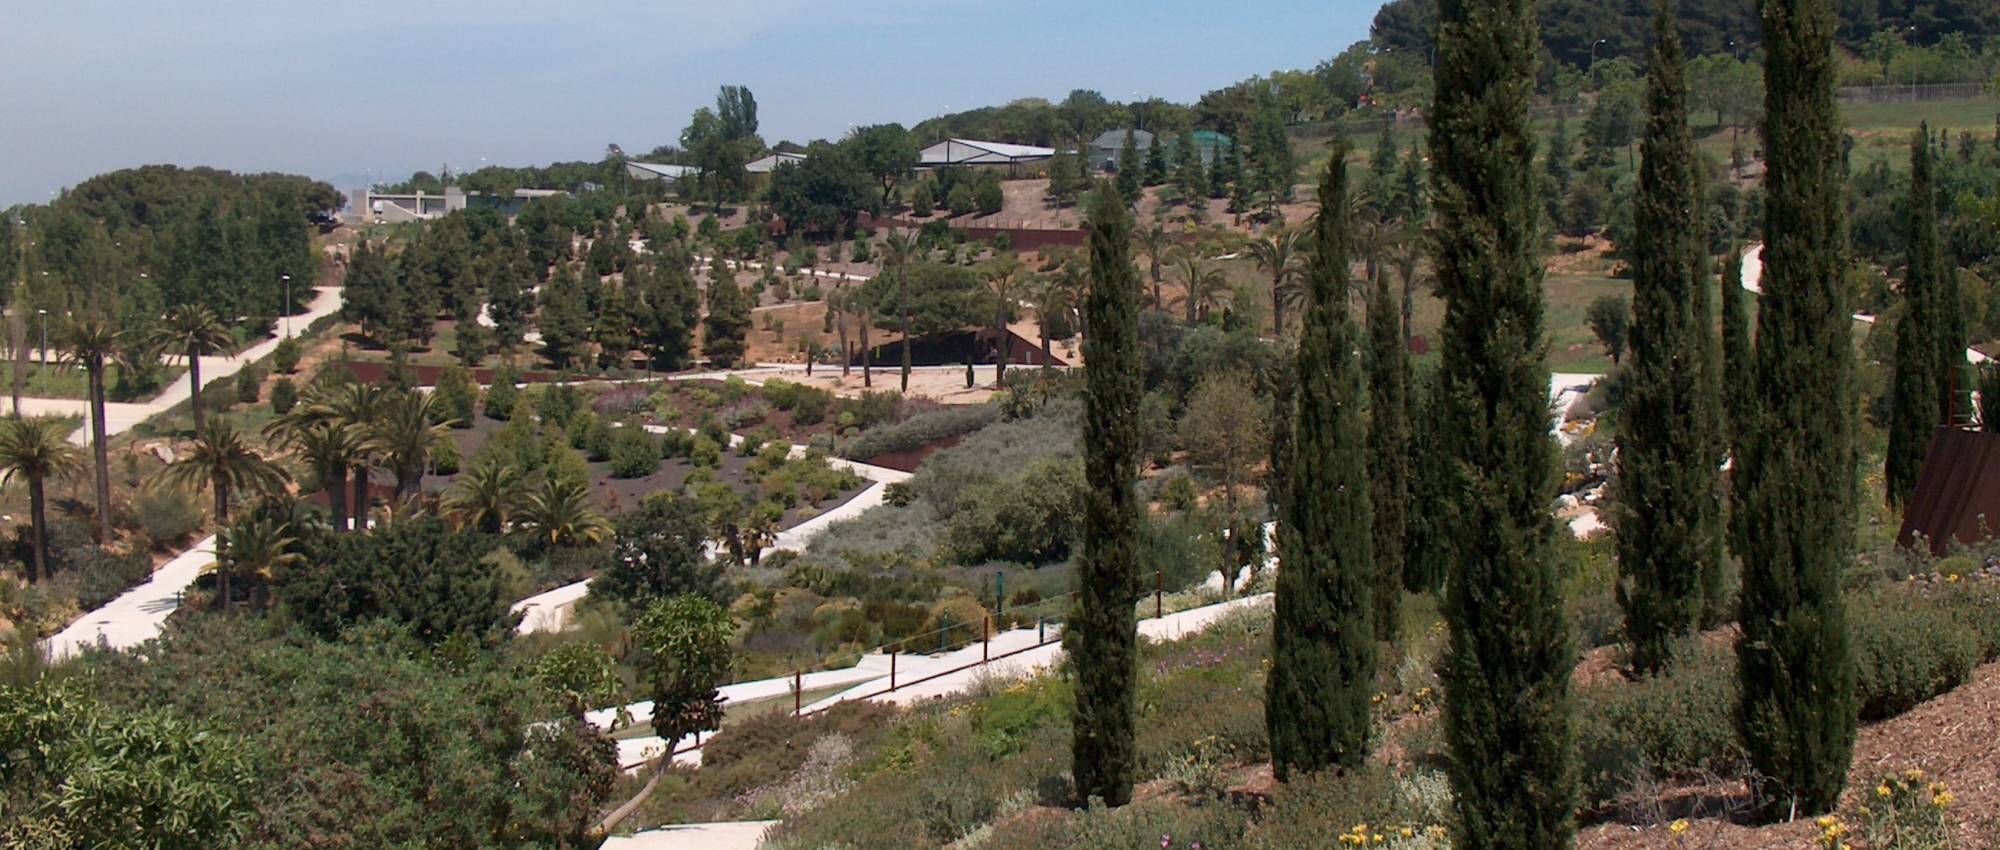 The Botanical Gardens of Barcelona. Valérie75 / Wikimedia Commons. CC BY-SA 3.0